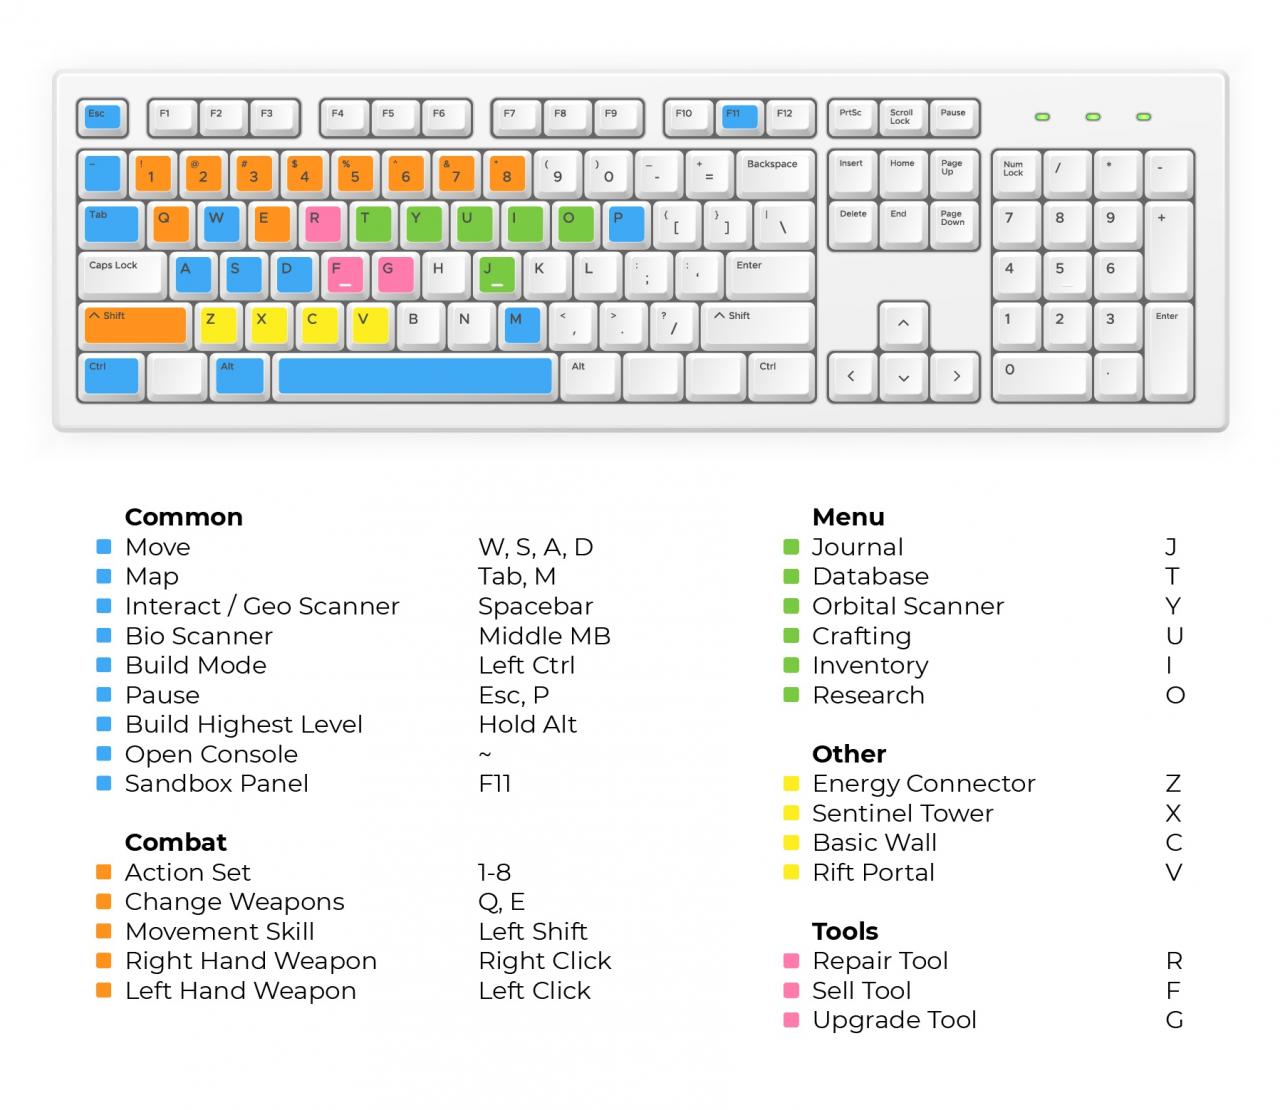 The Riftbreaker How to Customize Keyboard Shortcuts